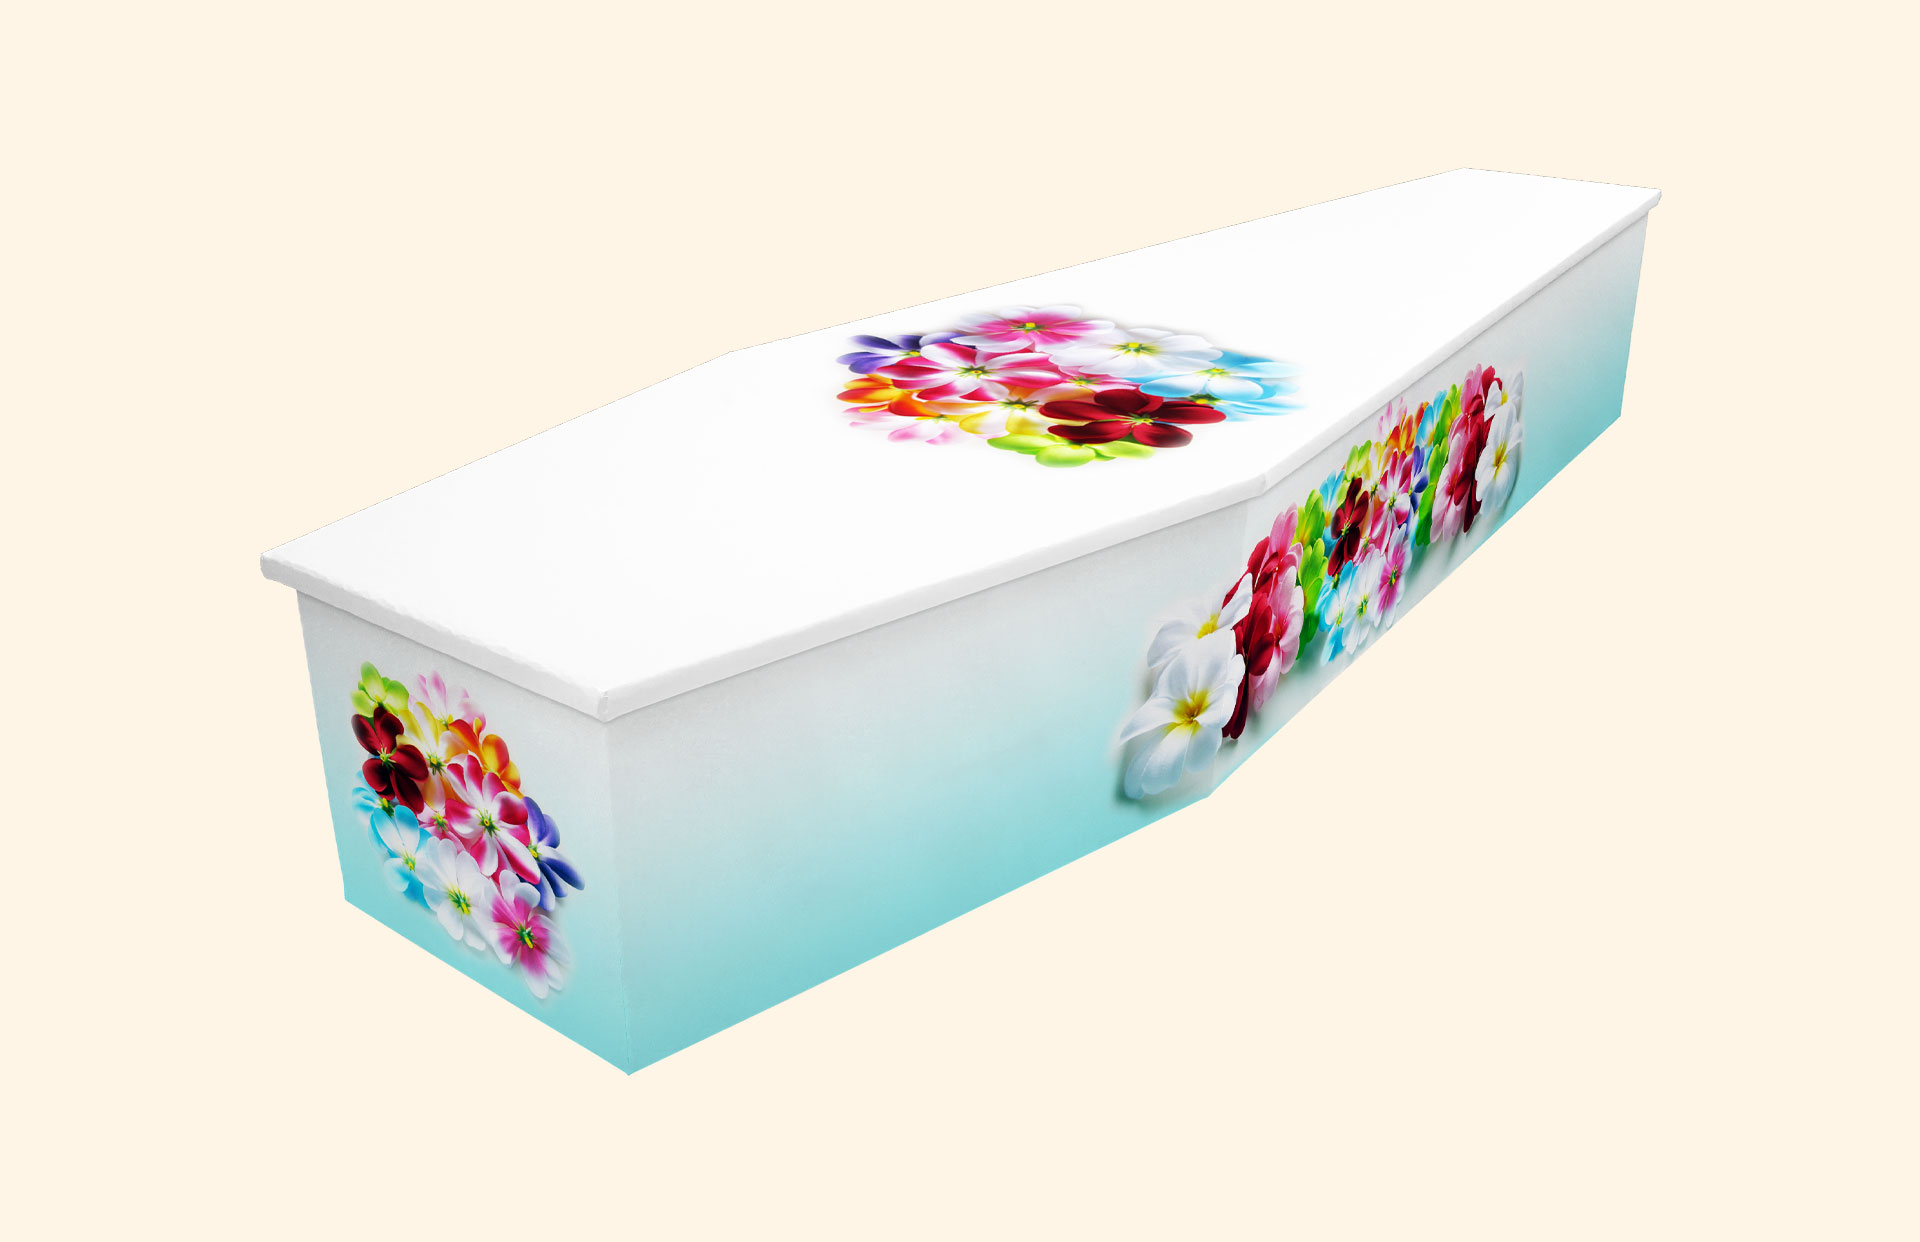 Simply Beautiful design on a cardboard coffin